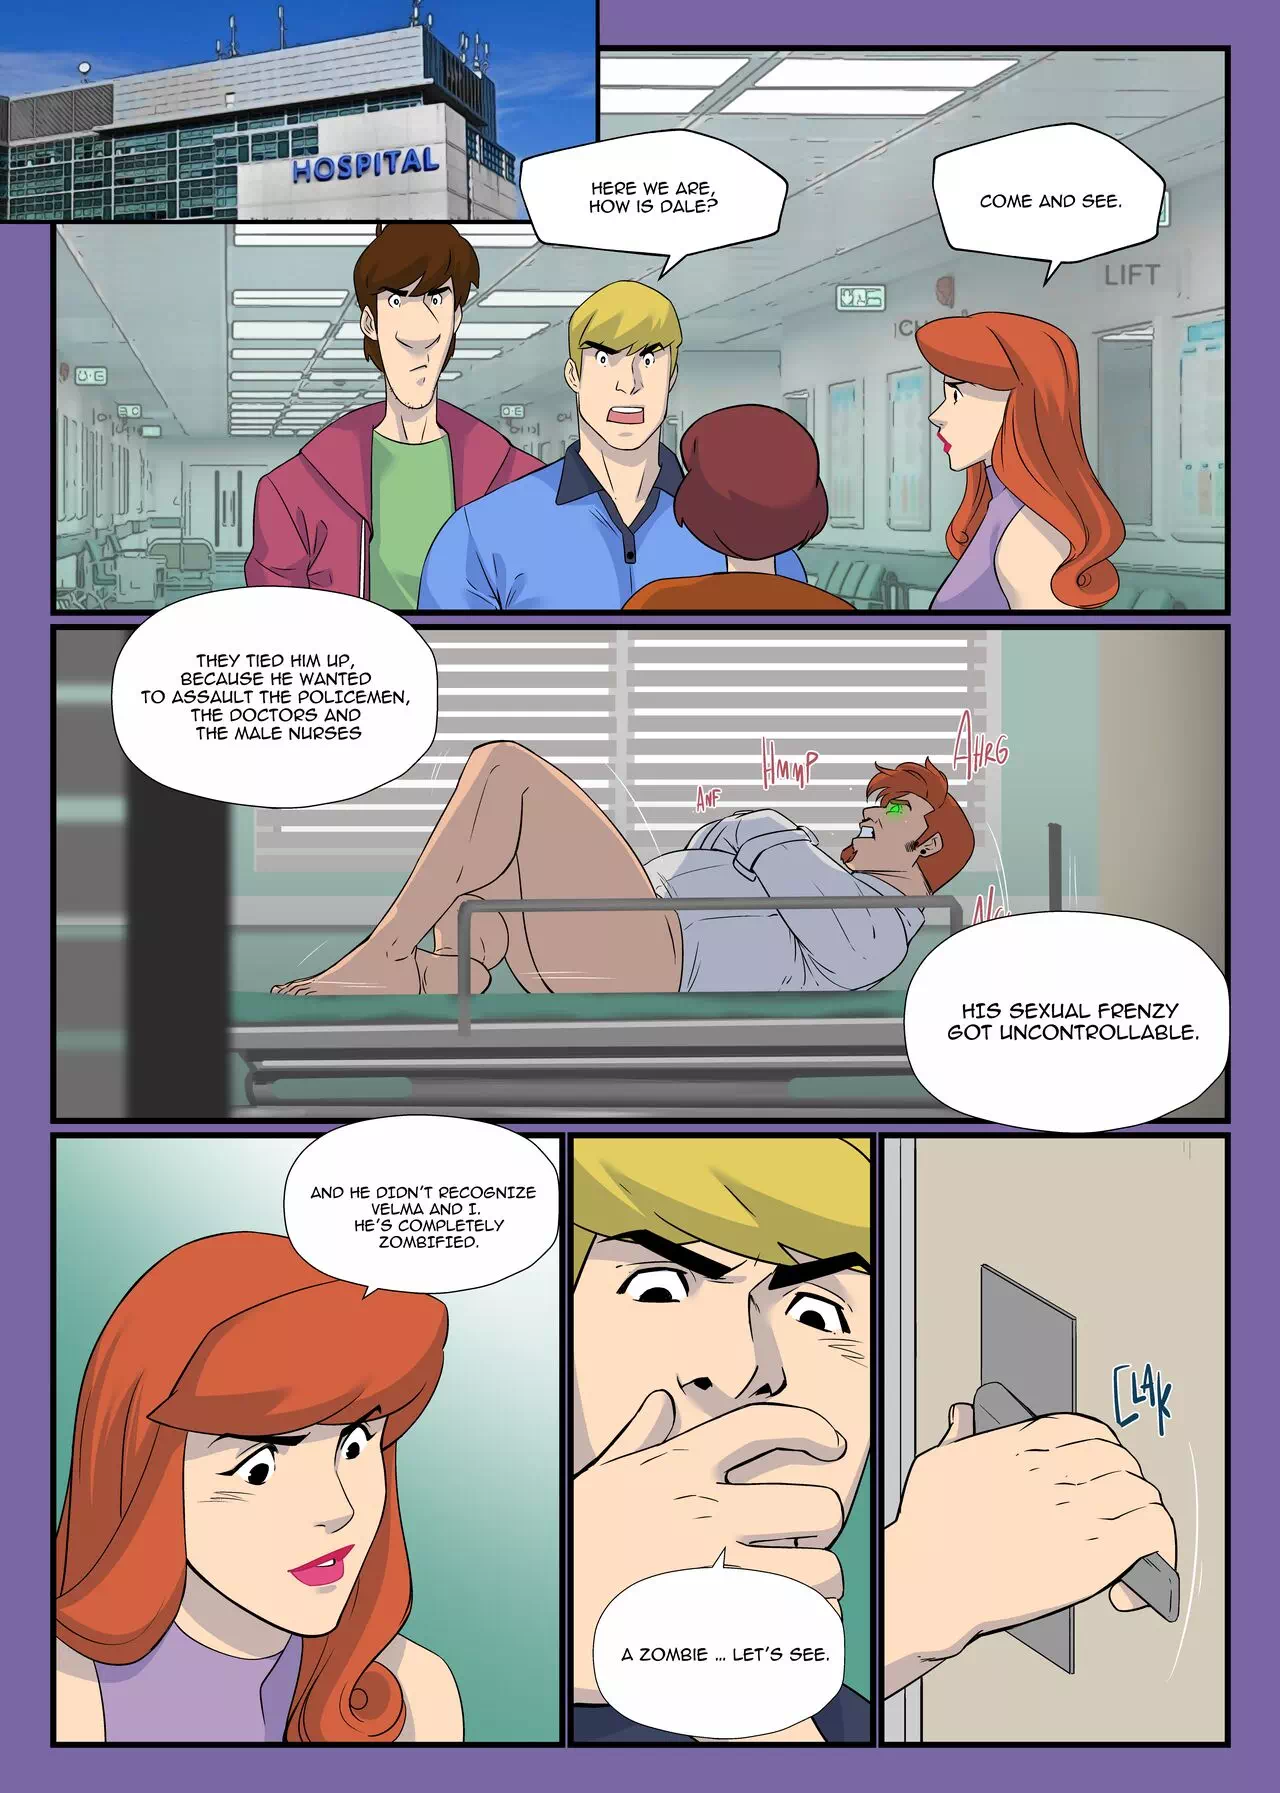 Scooby Doo Cartoon Anal Fuck - Yaoi porn comics Scooby-Doo â€“ Scooby Dudes: The sex zombies. Part 1 Â» Page 6